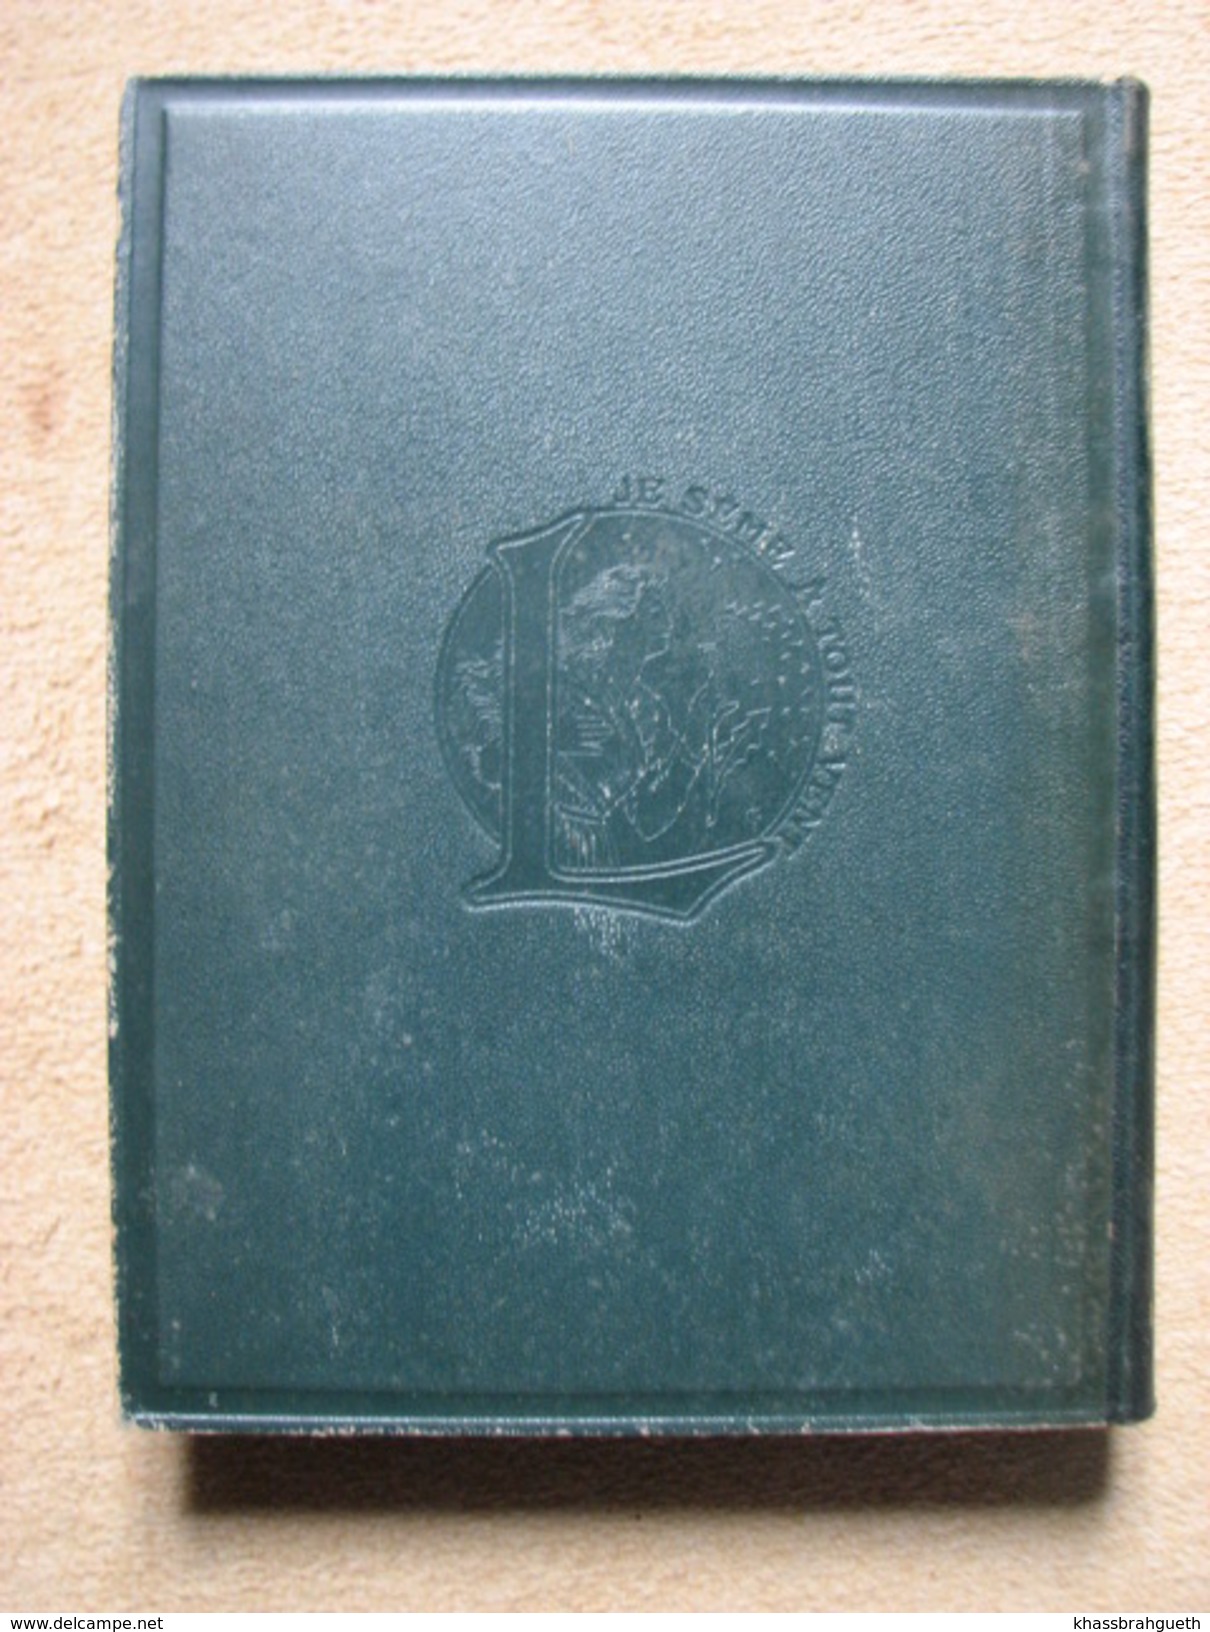 FELIX GUIRAND - MYTHOLOGIE GENERALE - LAROUSSE (COPYRIGHT 1935) - Enzyklopädien